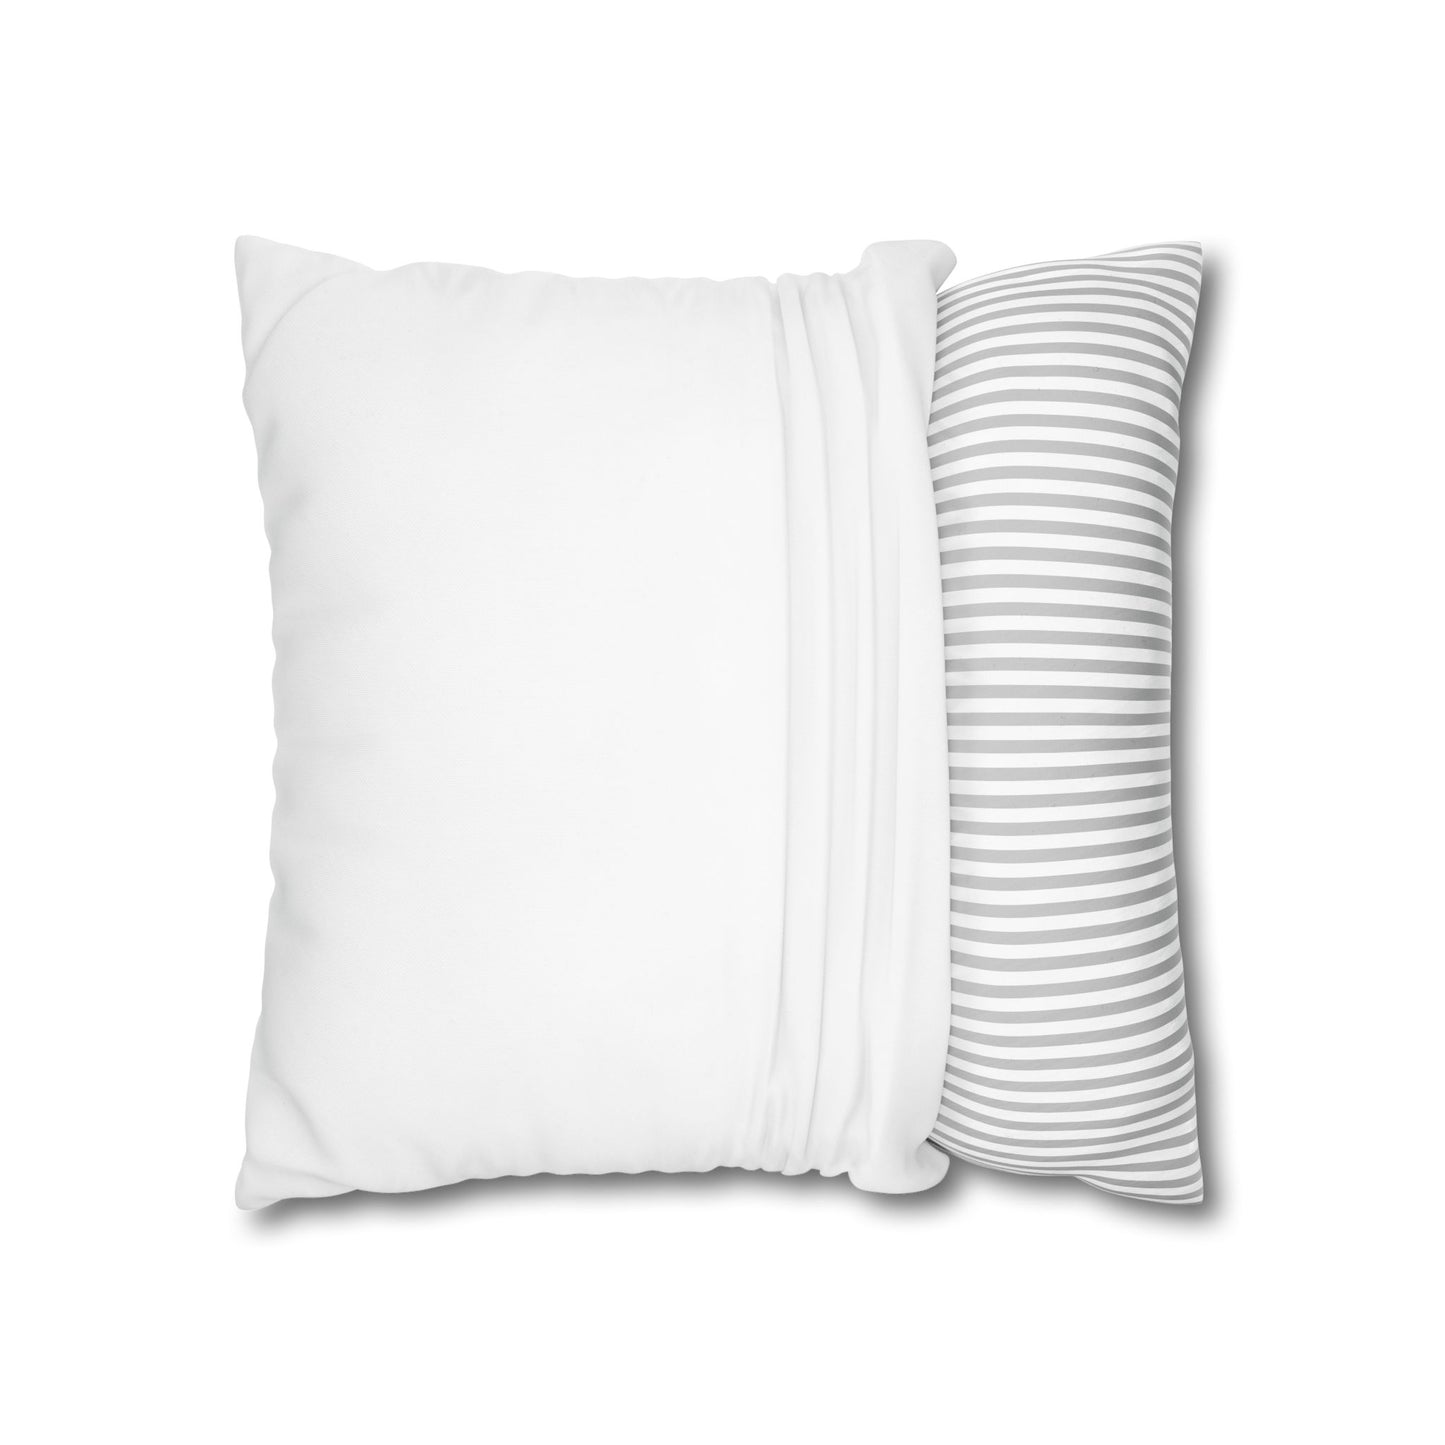 Christmas Pillow Covers 18x18 Spun Polyester